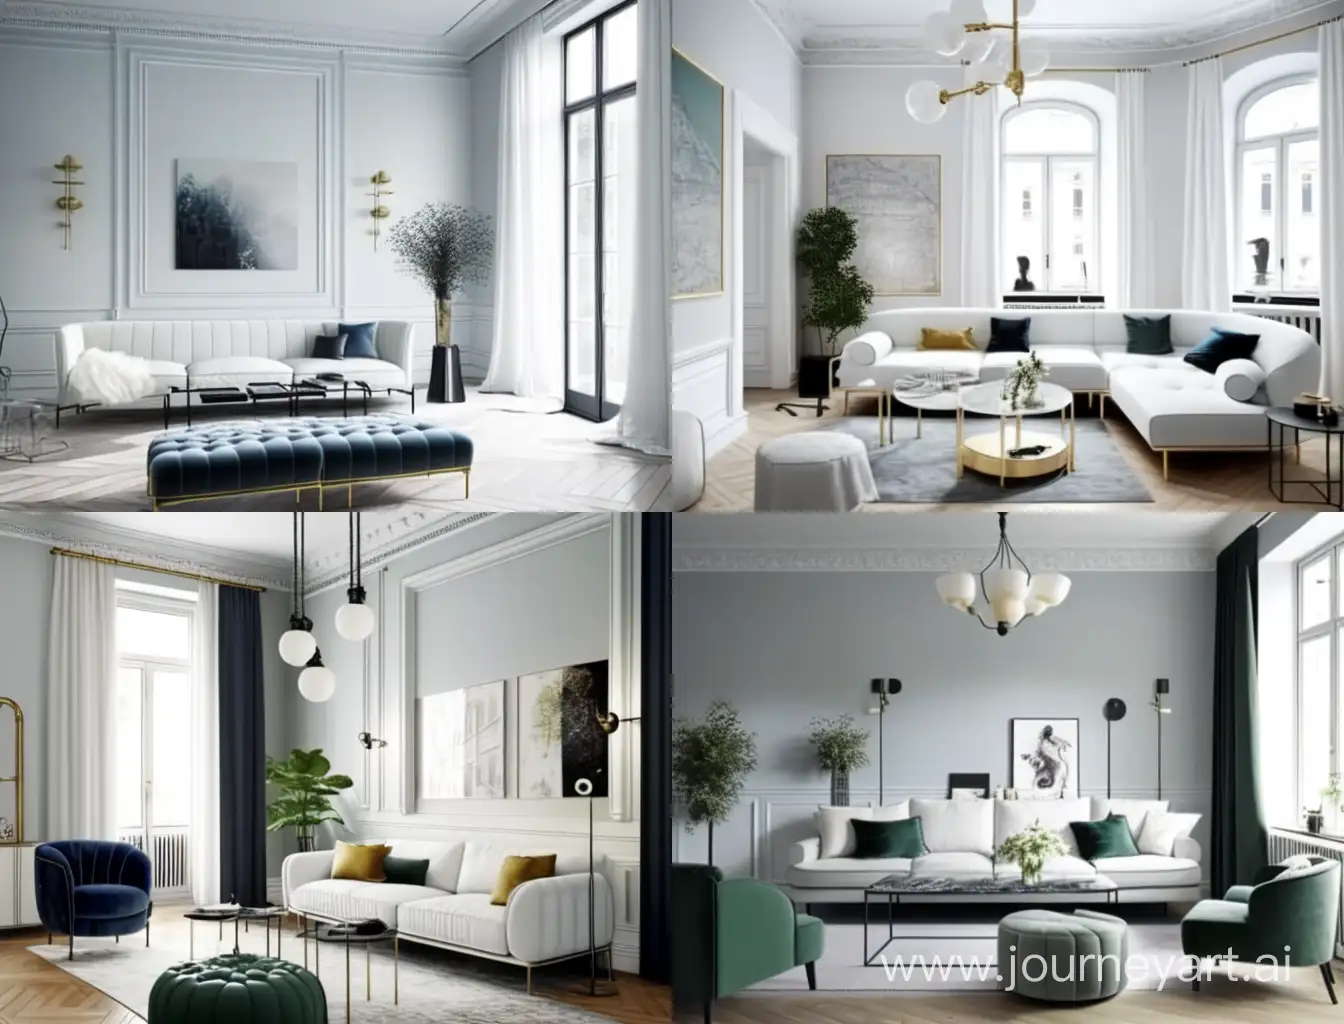 Chic-White-Minimalist-Sofa-with-Elegant-Brass-Legs-in-ParisianInspired-Interior